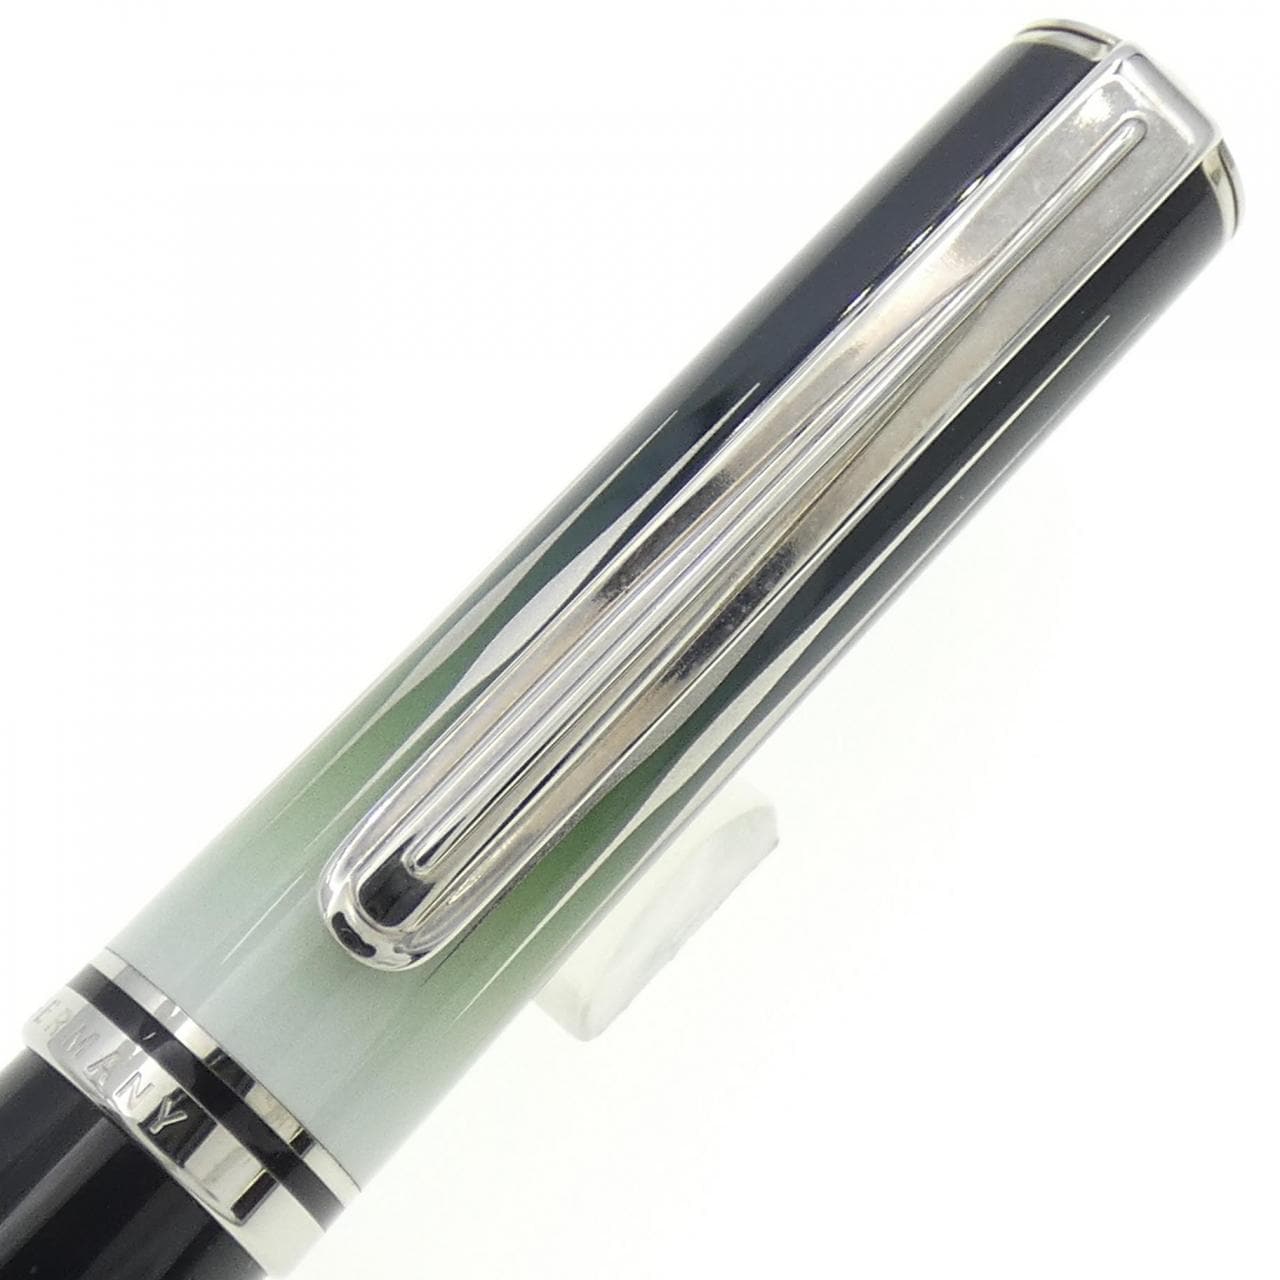 Pelikan Natural Beauty Series K640 Polar Light Ballpoint Pen